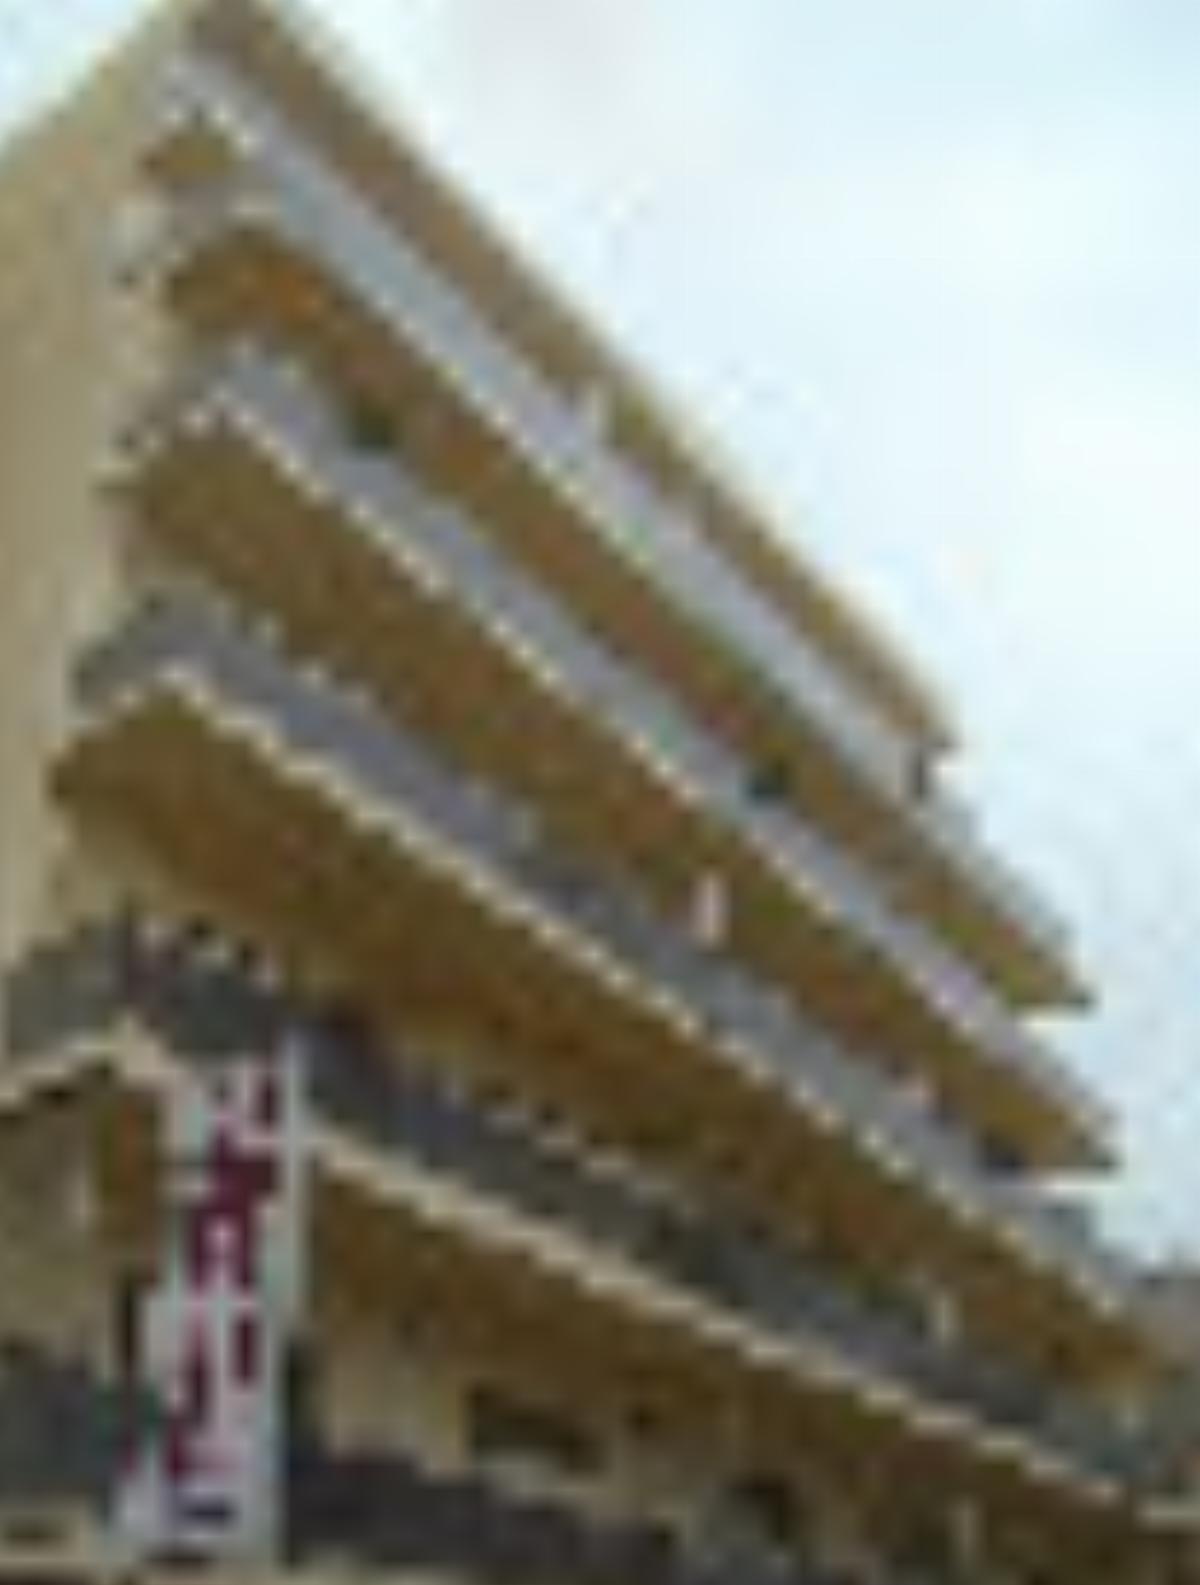 Al Baraka Hotel Dakar Senegal